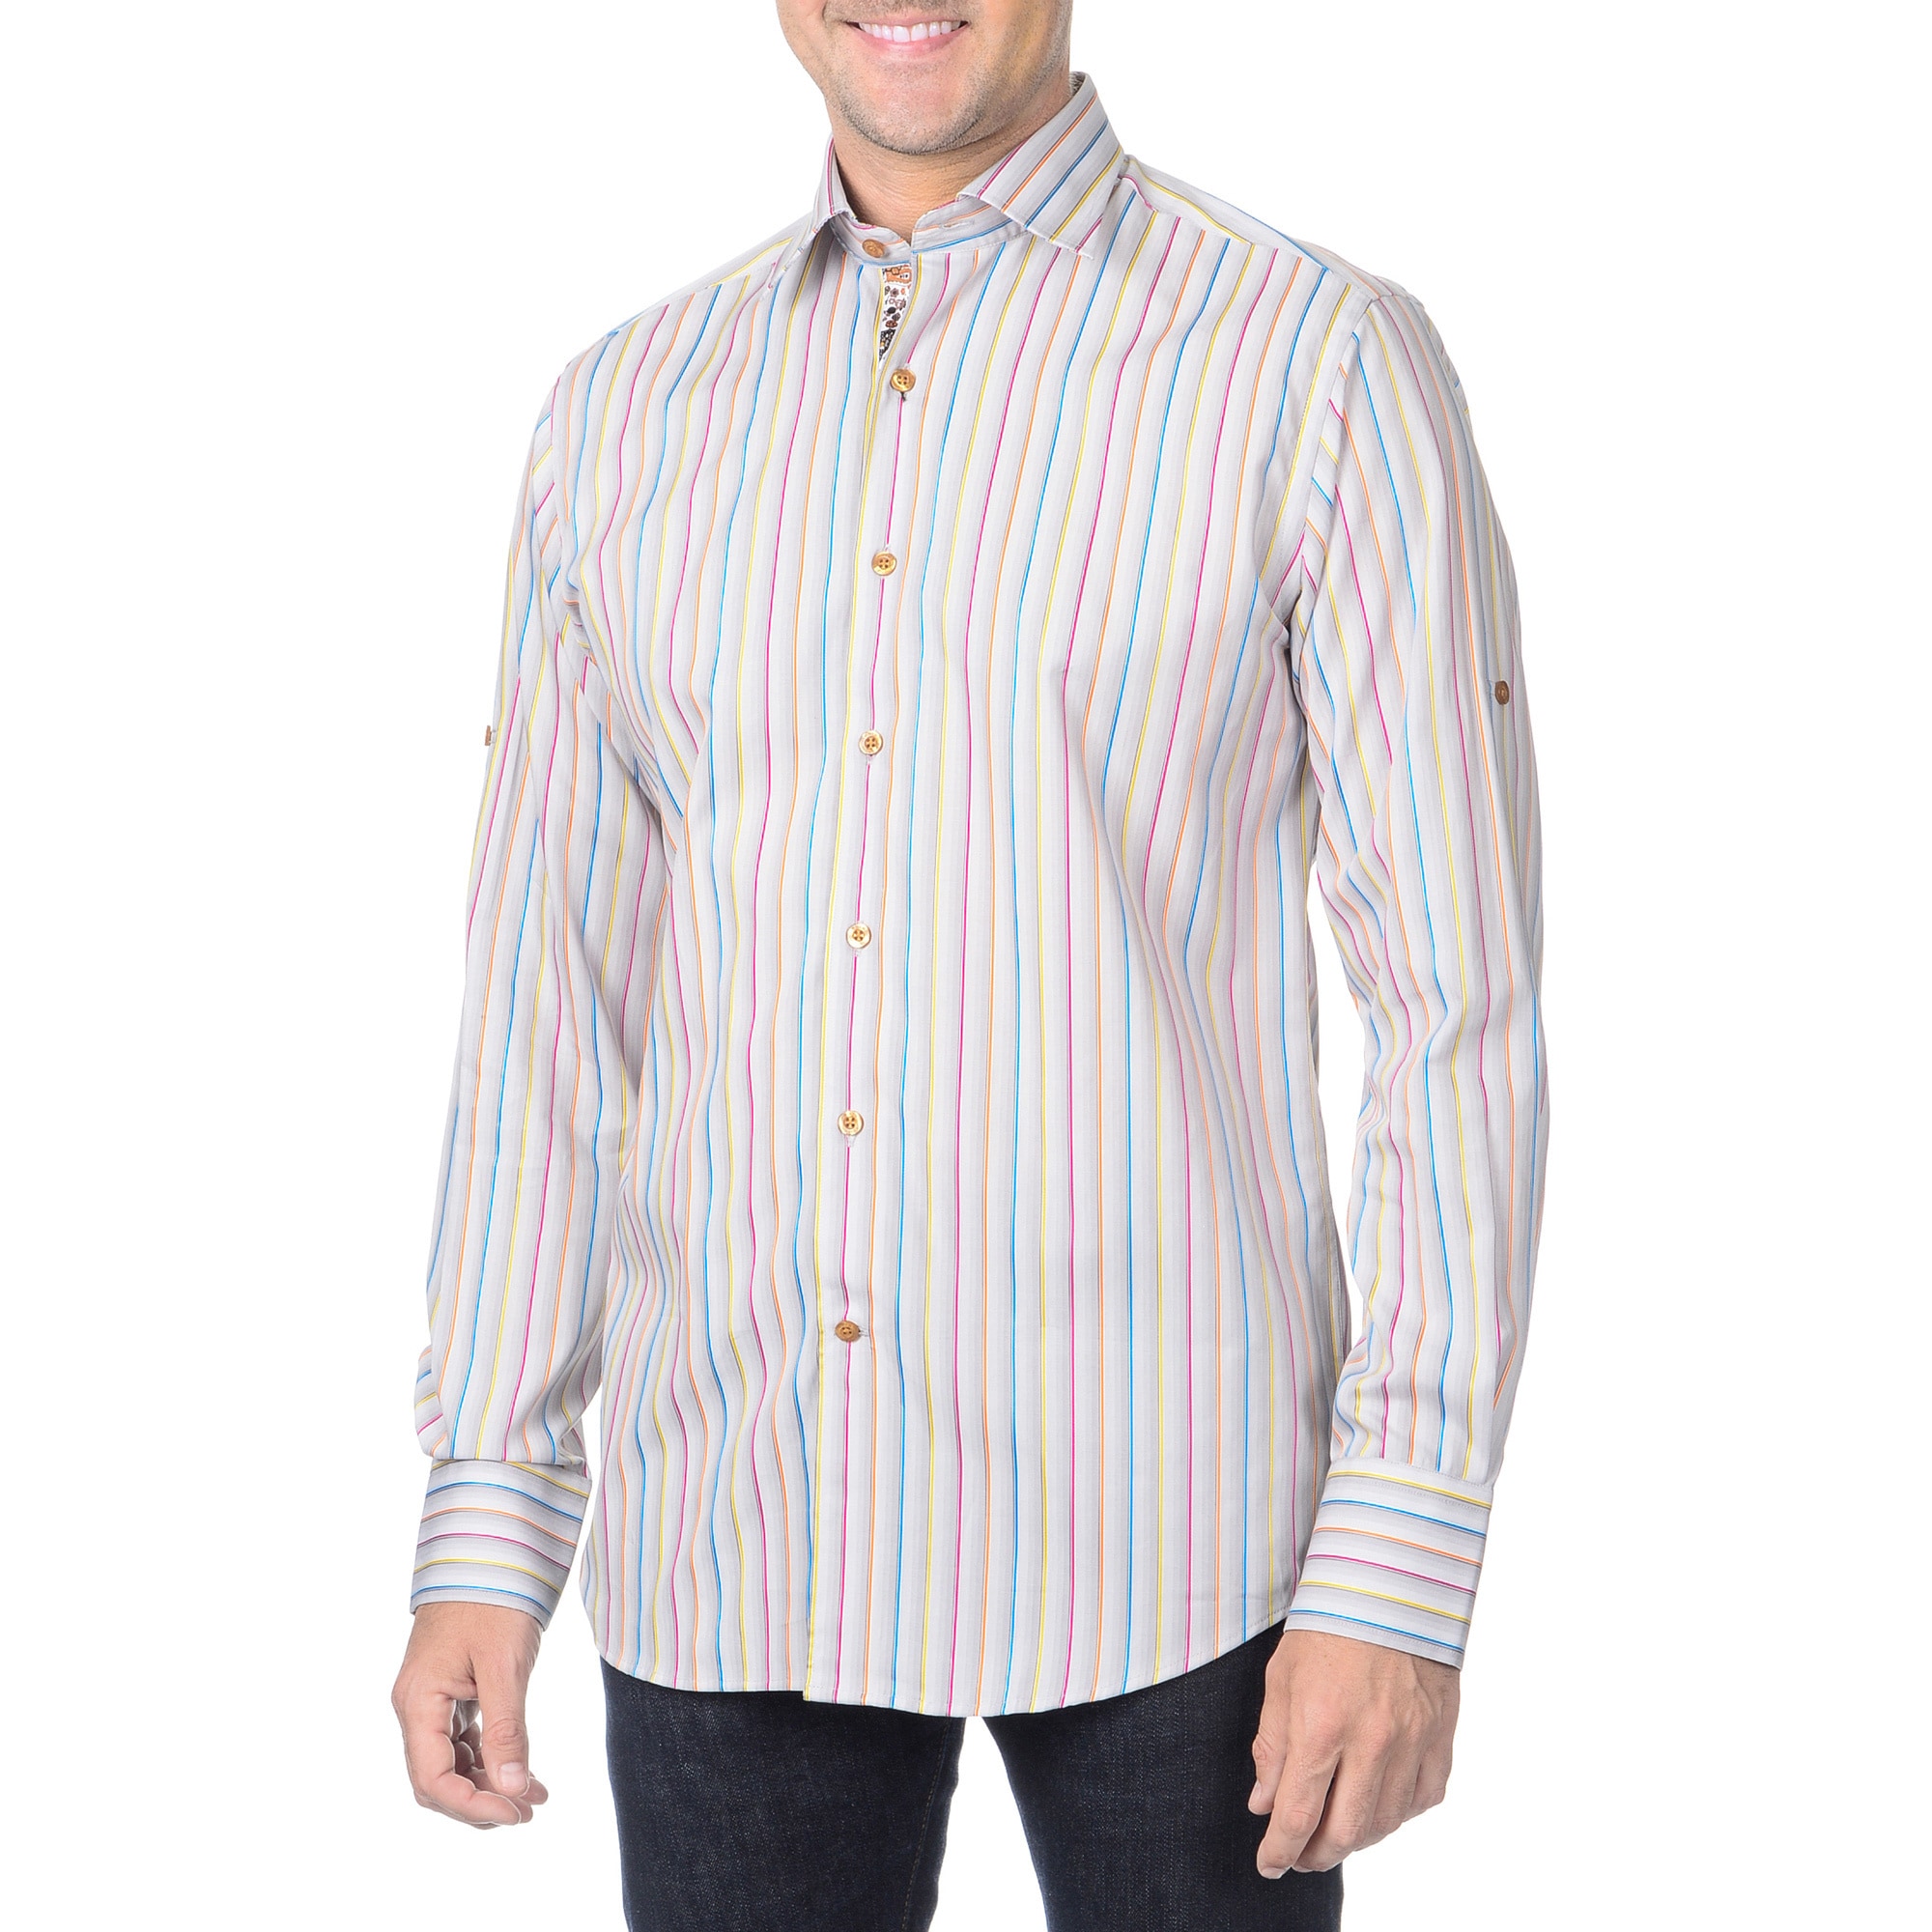 Franco Negretti Mens Grey Stripe Woven Shirt